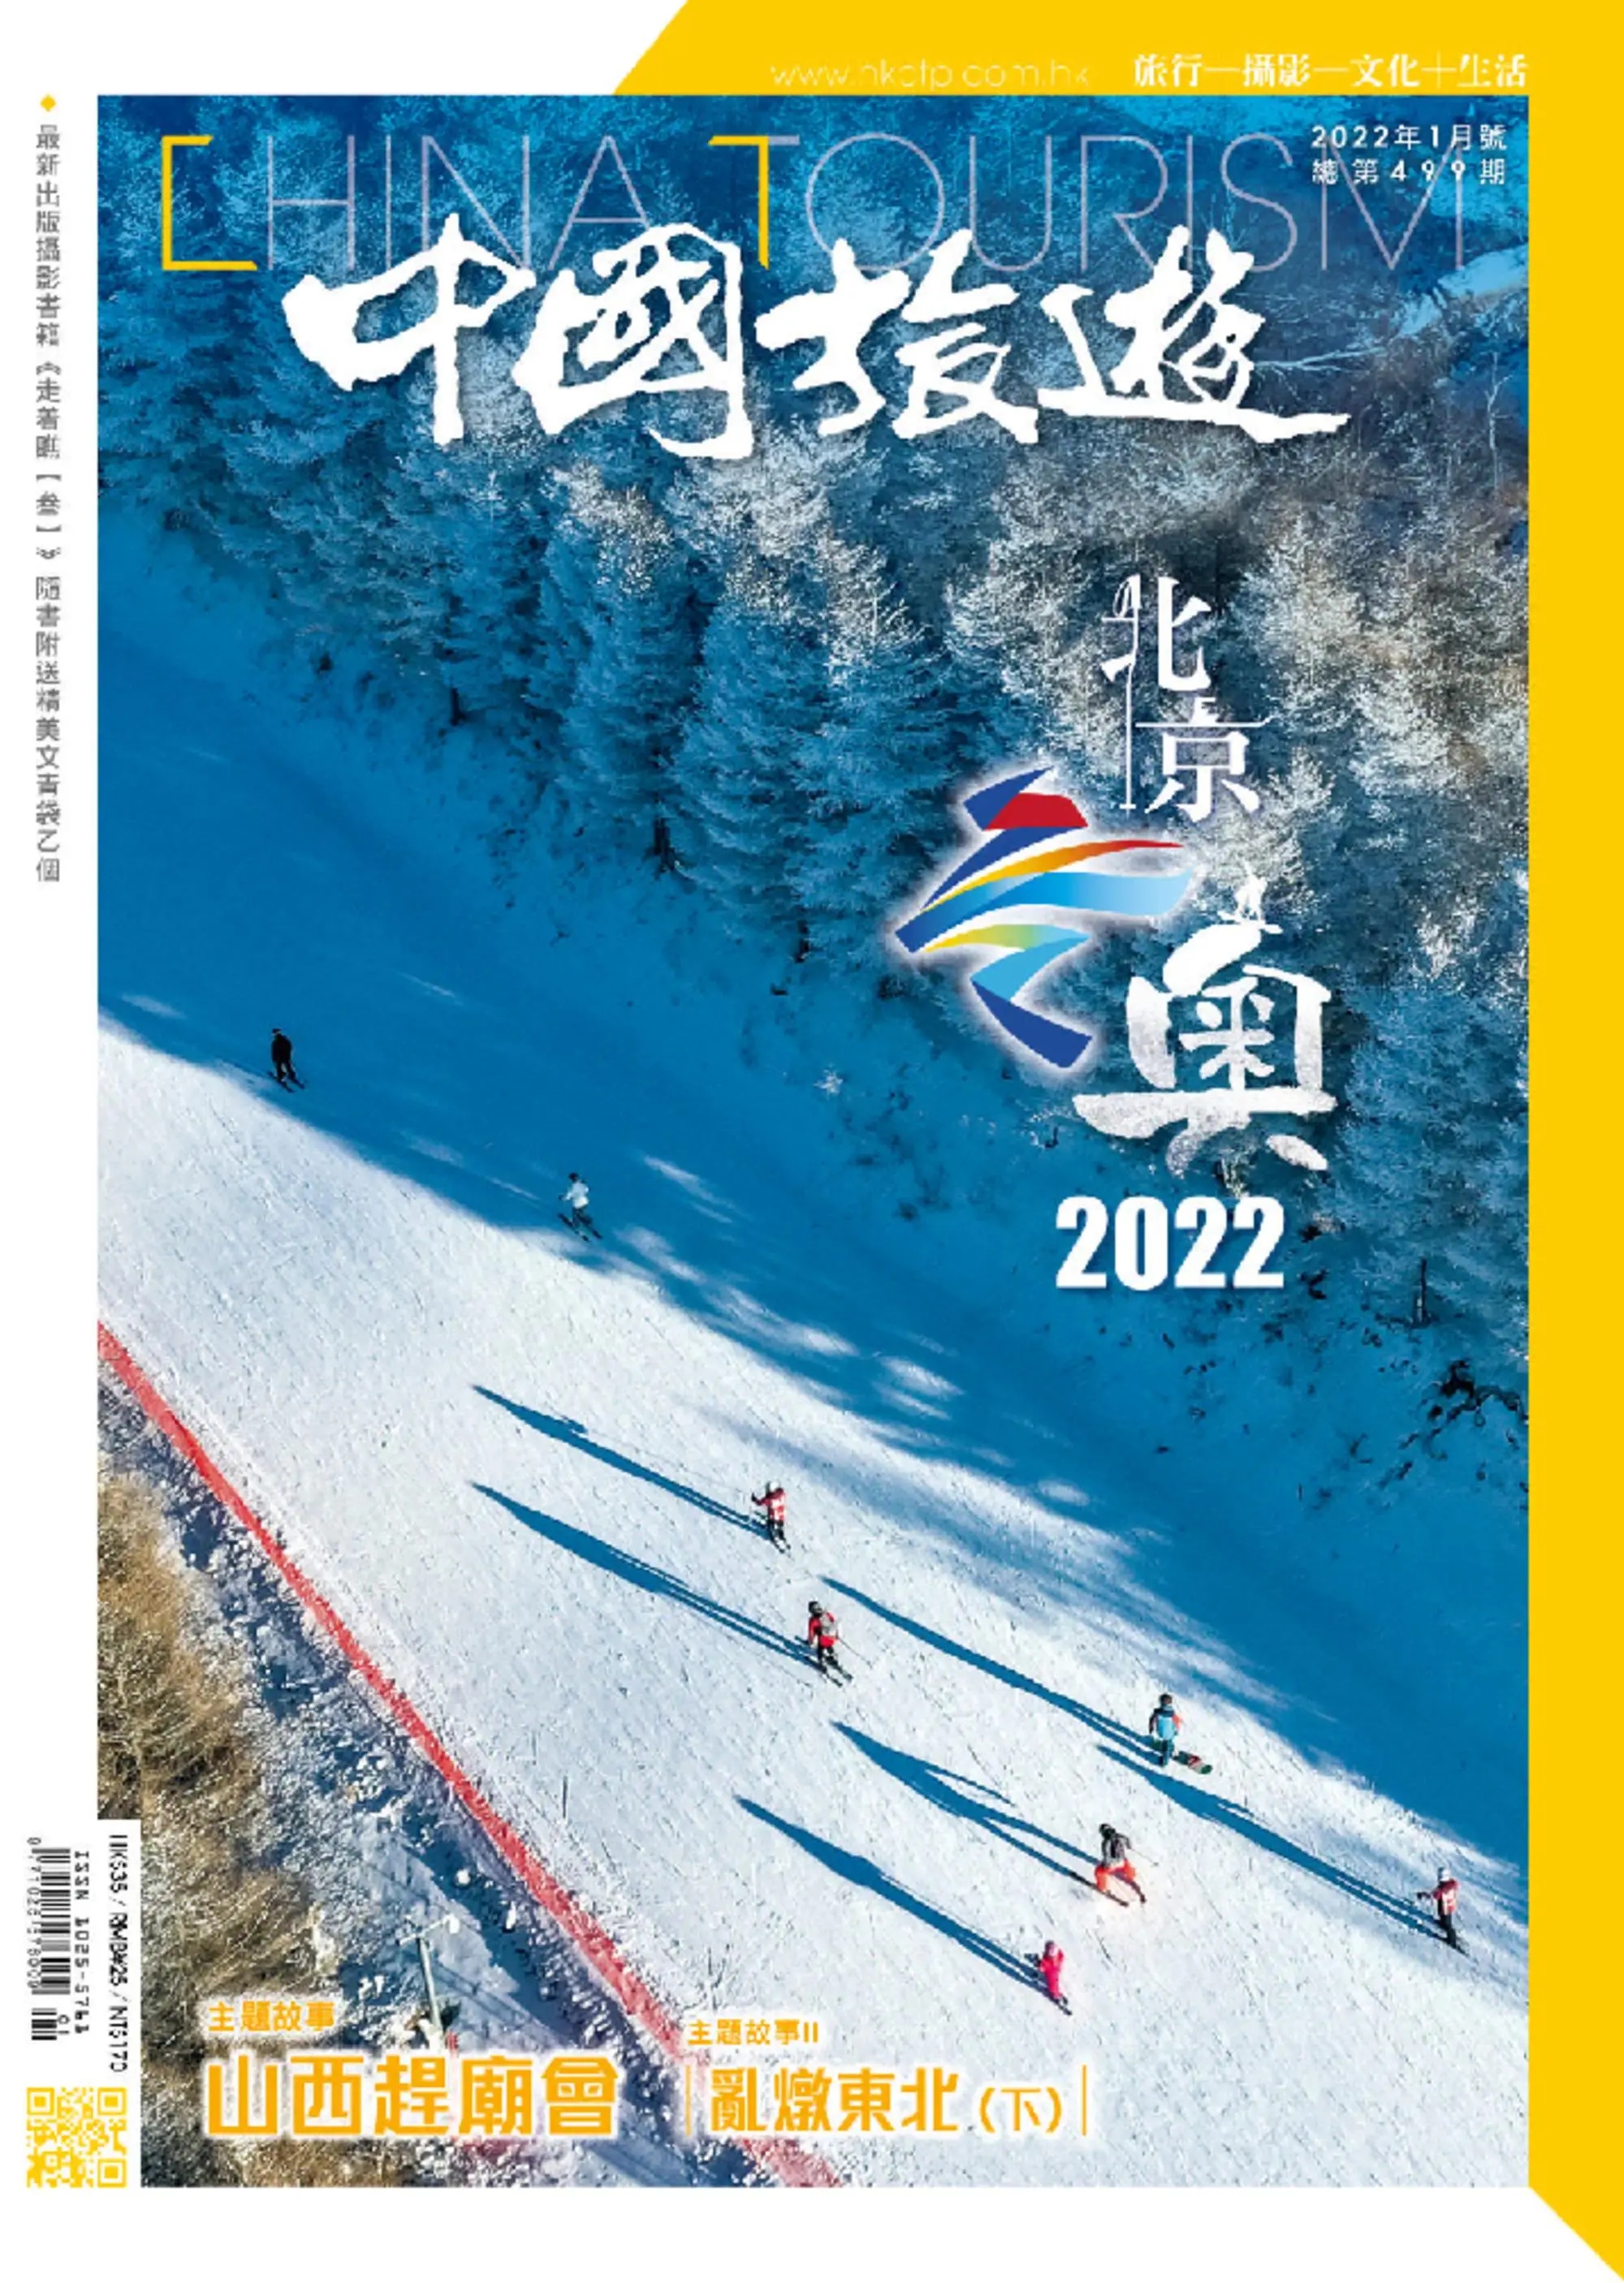 China Tourism 中國旅遊 - 2022 年 1 月